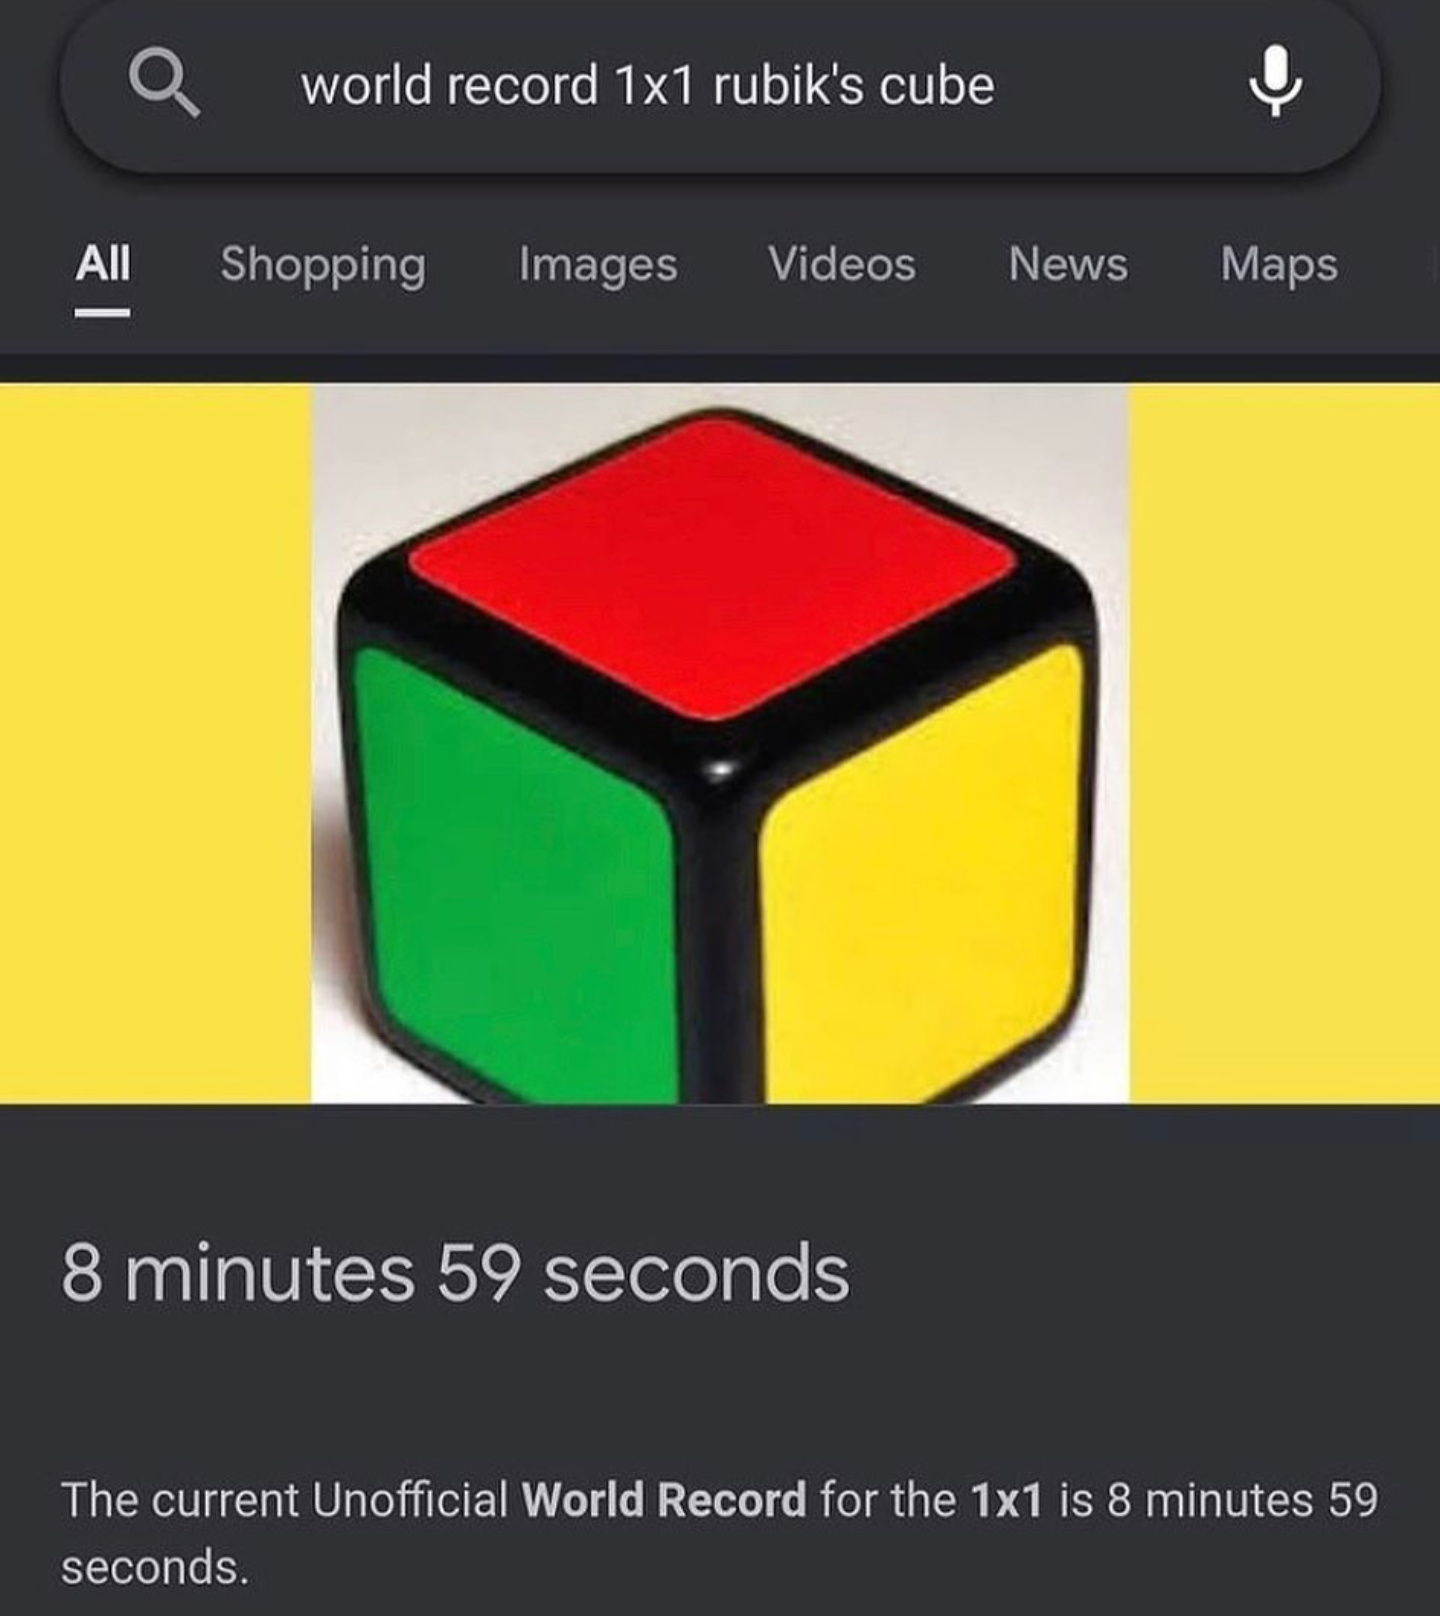 1x1 rubik's cube world record video